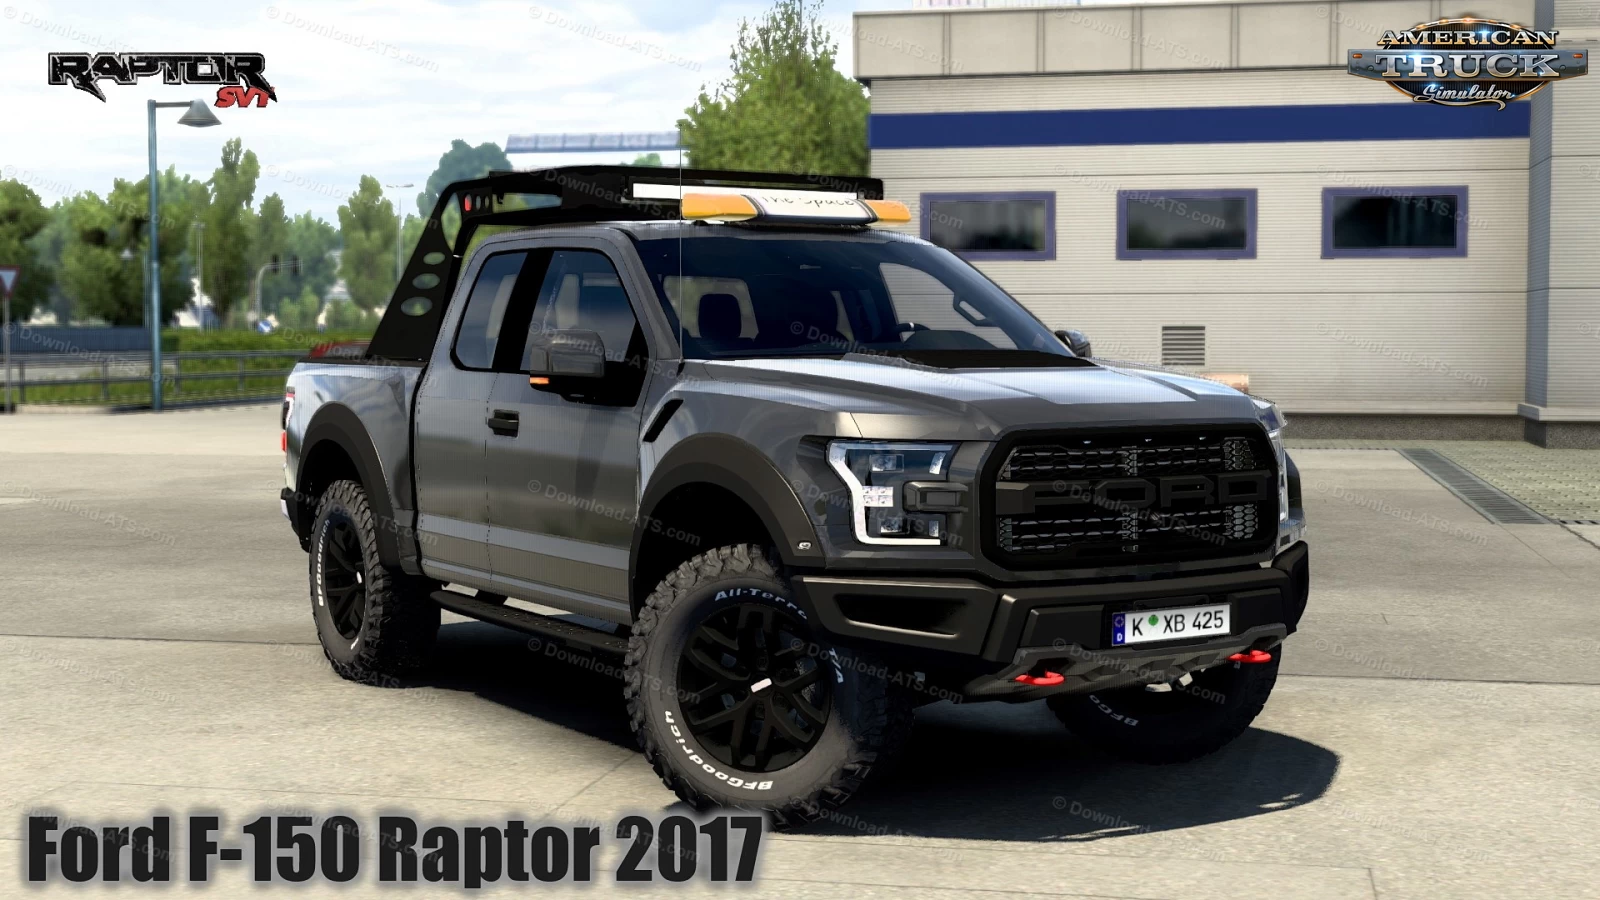 Ford F-150 Raptor 2017 + Interior v2.1 (1.46.x) for ATS